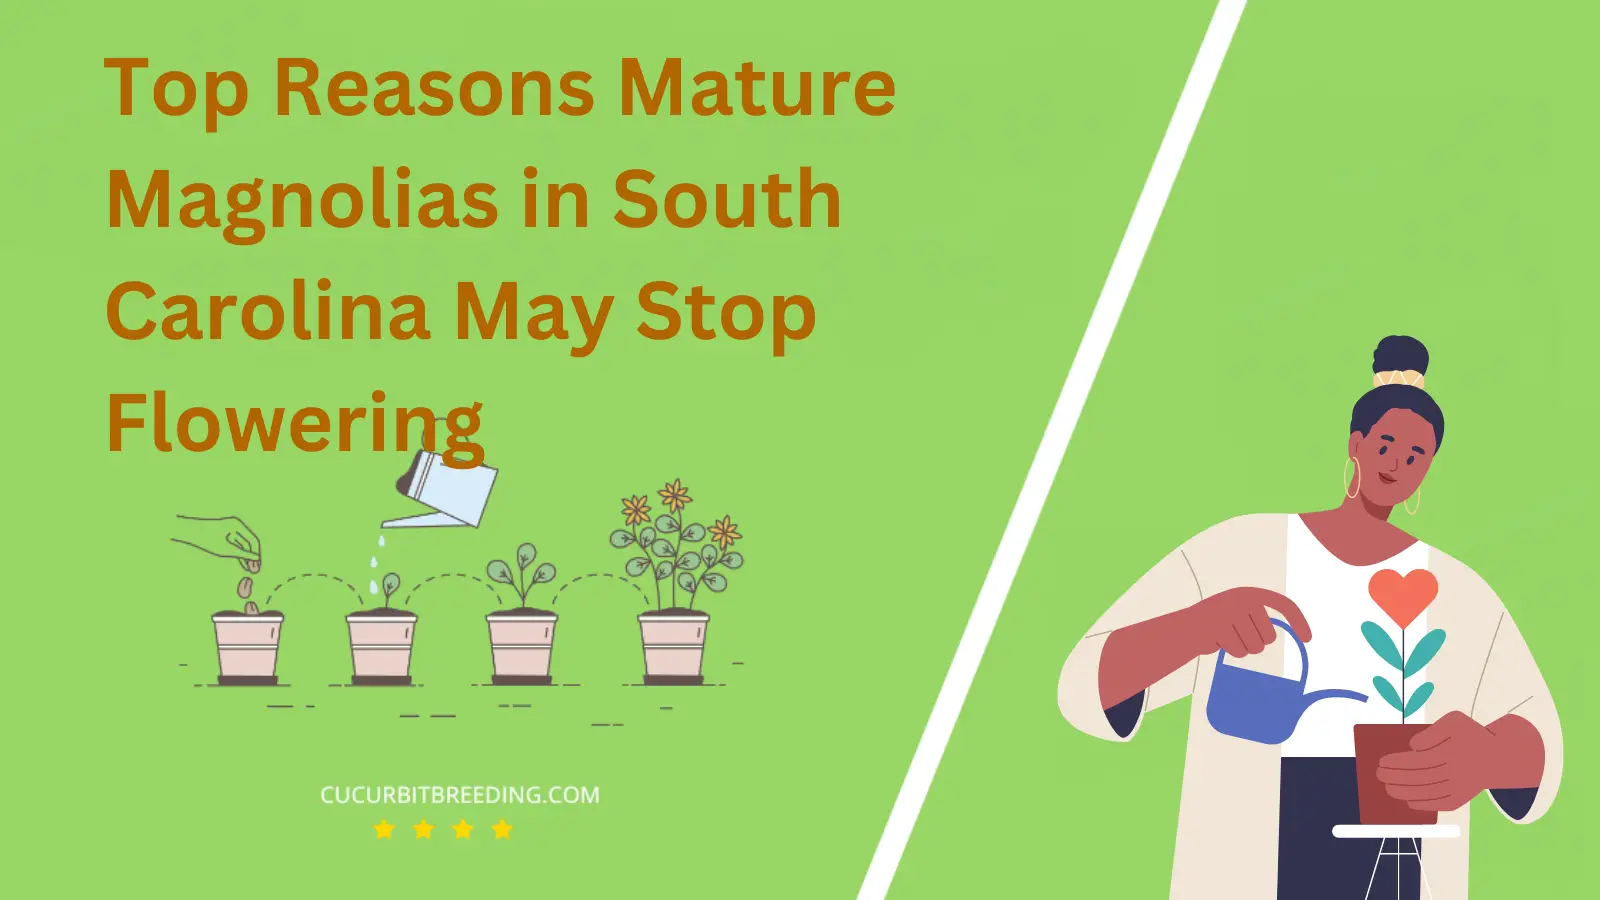 Top Reasons Mature Magnolias in South Carolina May Stop Flowering